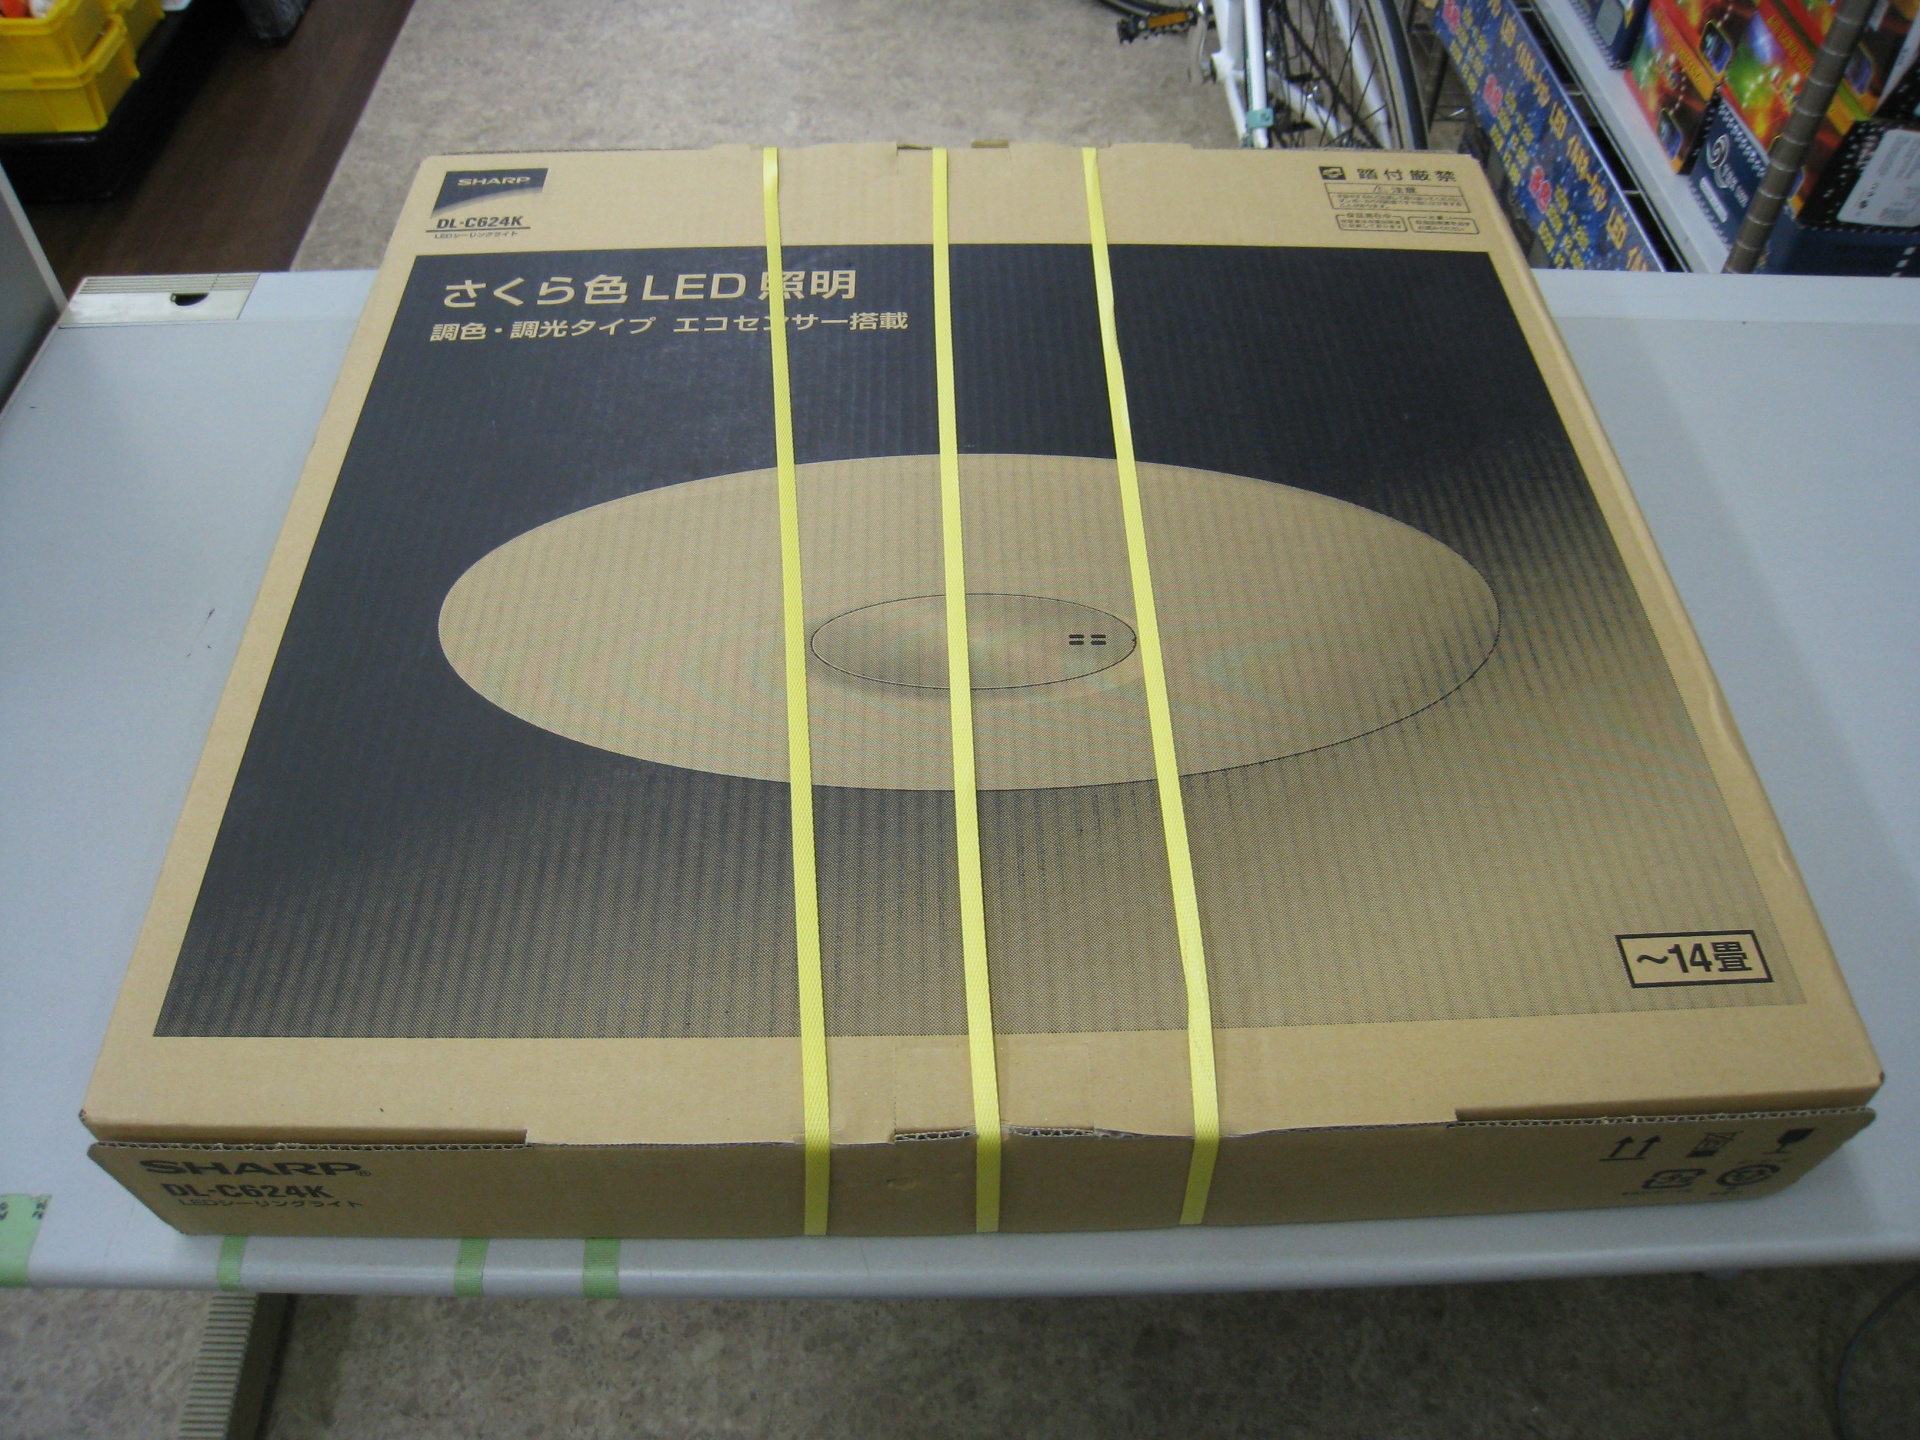 SHARP シャープ LEDシーリングライト エルム DL-C624K 電化製品買取強化中 | 香川県高松市の工具買取・販売に強いリサイクル